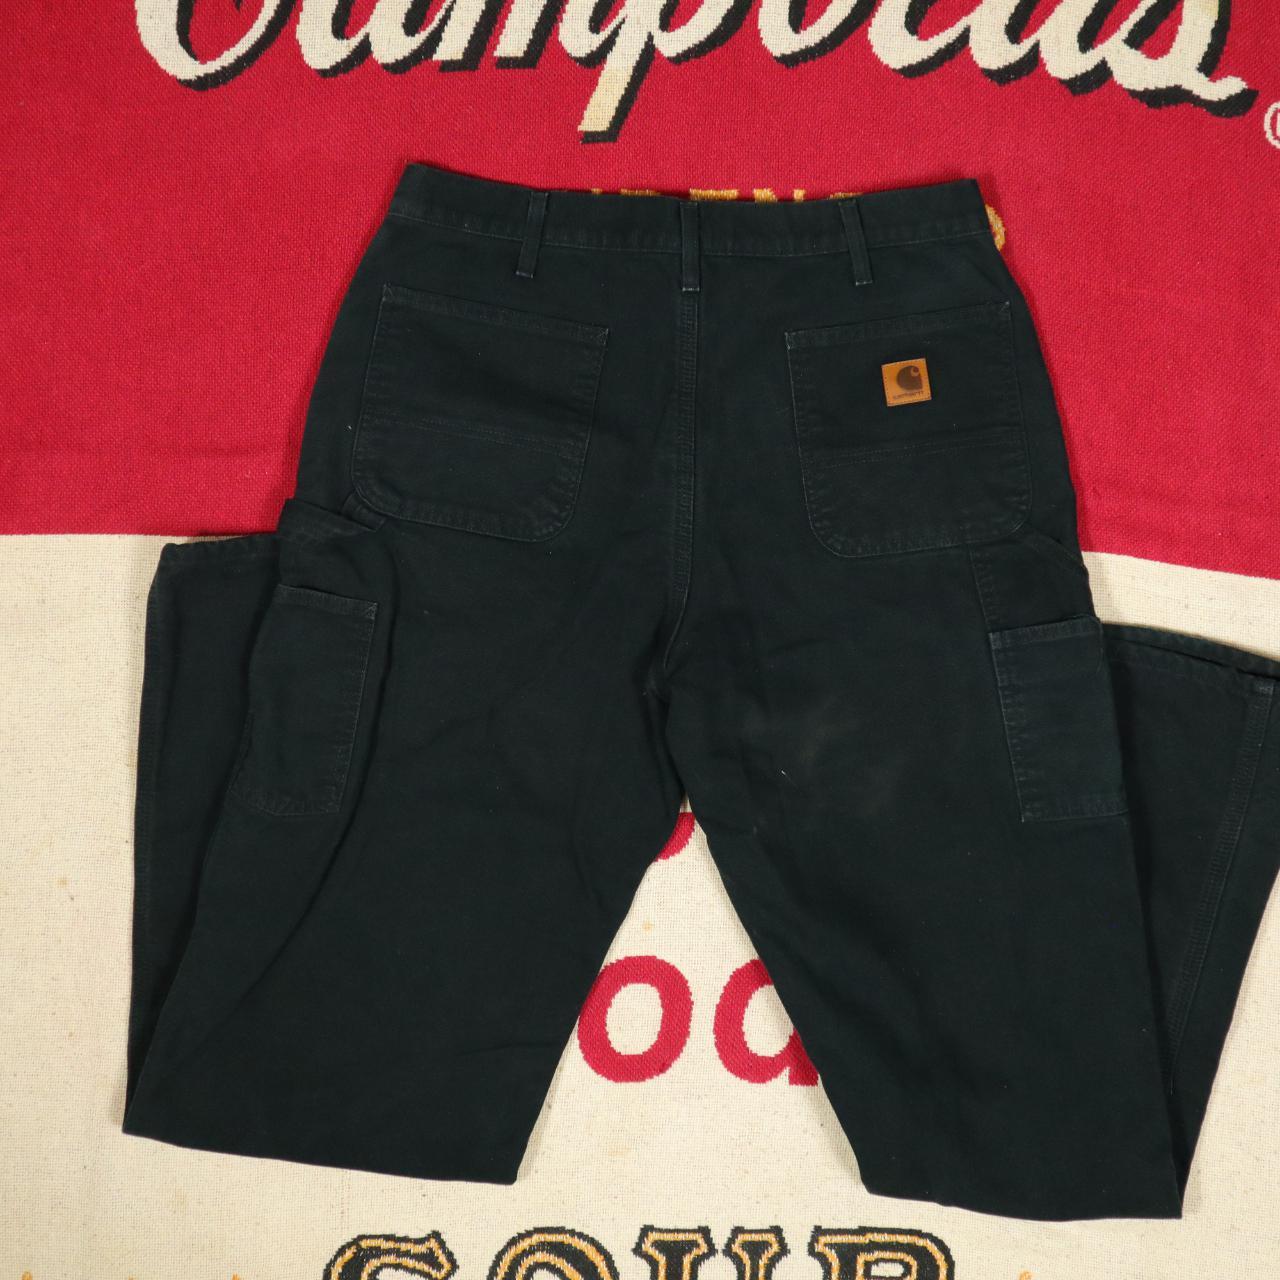 Product Image 1 - Vintage Carhartt Jeans

Size 34x34

Waist: 34"
Length: